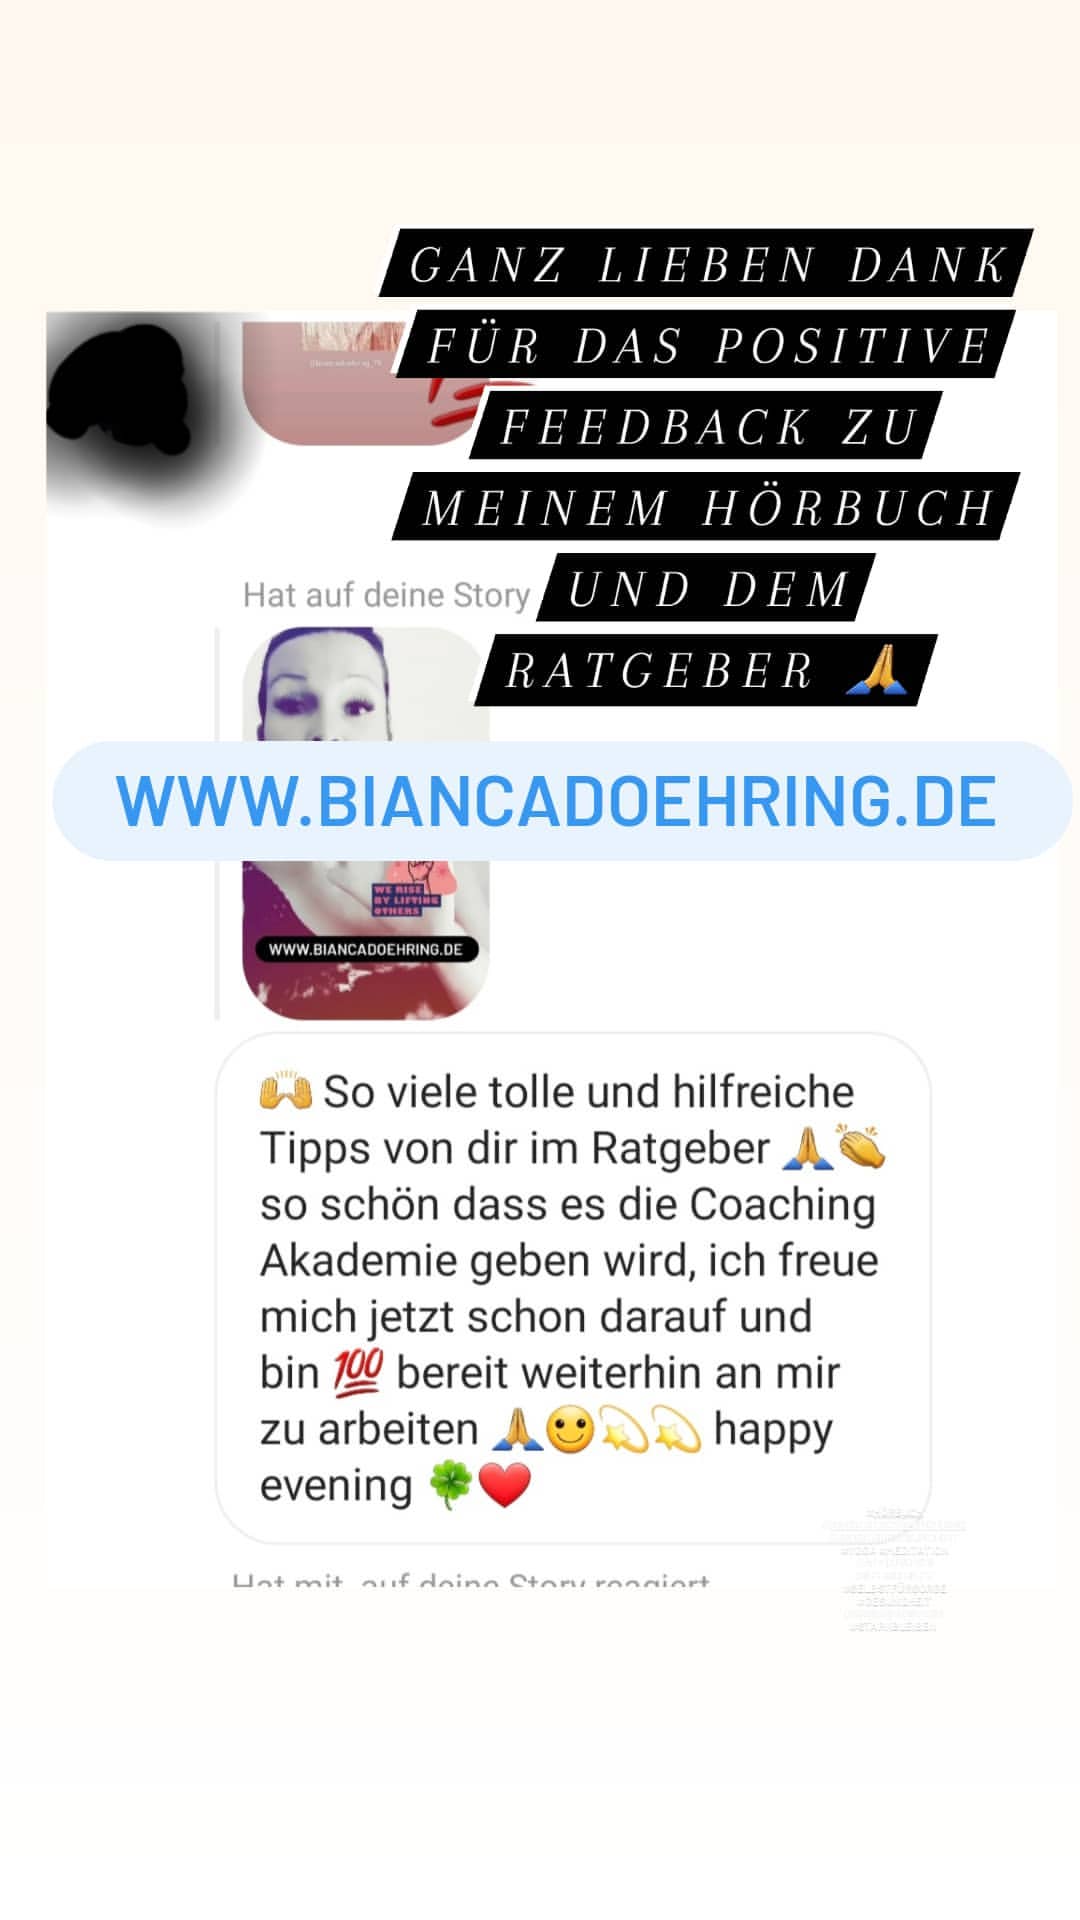 Bianca Döhring Cybermobbing Hörbuch Fake Feedback Bewertungen Rezension Kunden